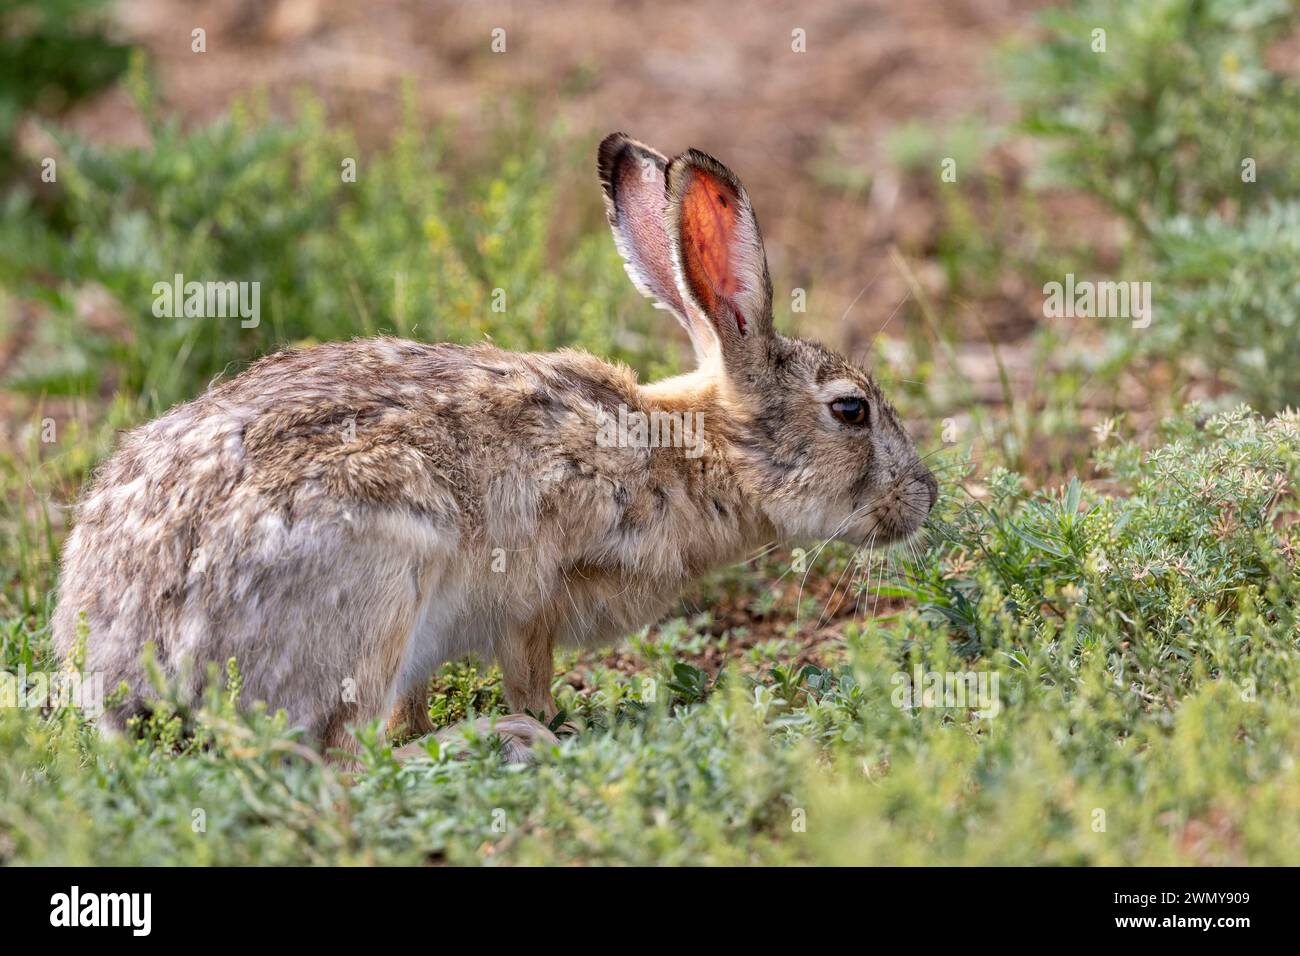 Mongolia, Eastern Mongolia, Steppe, Tolai's Hare (Lepus tolai), in the grass Stock Photo